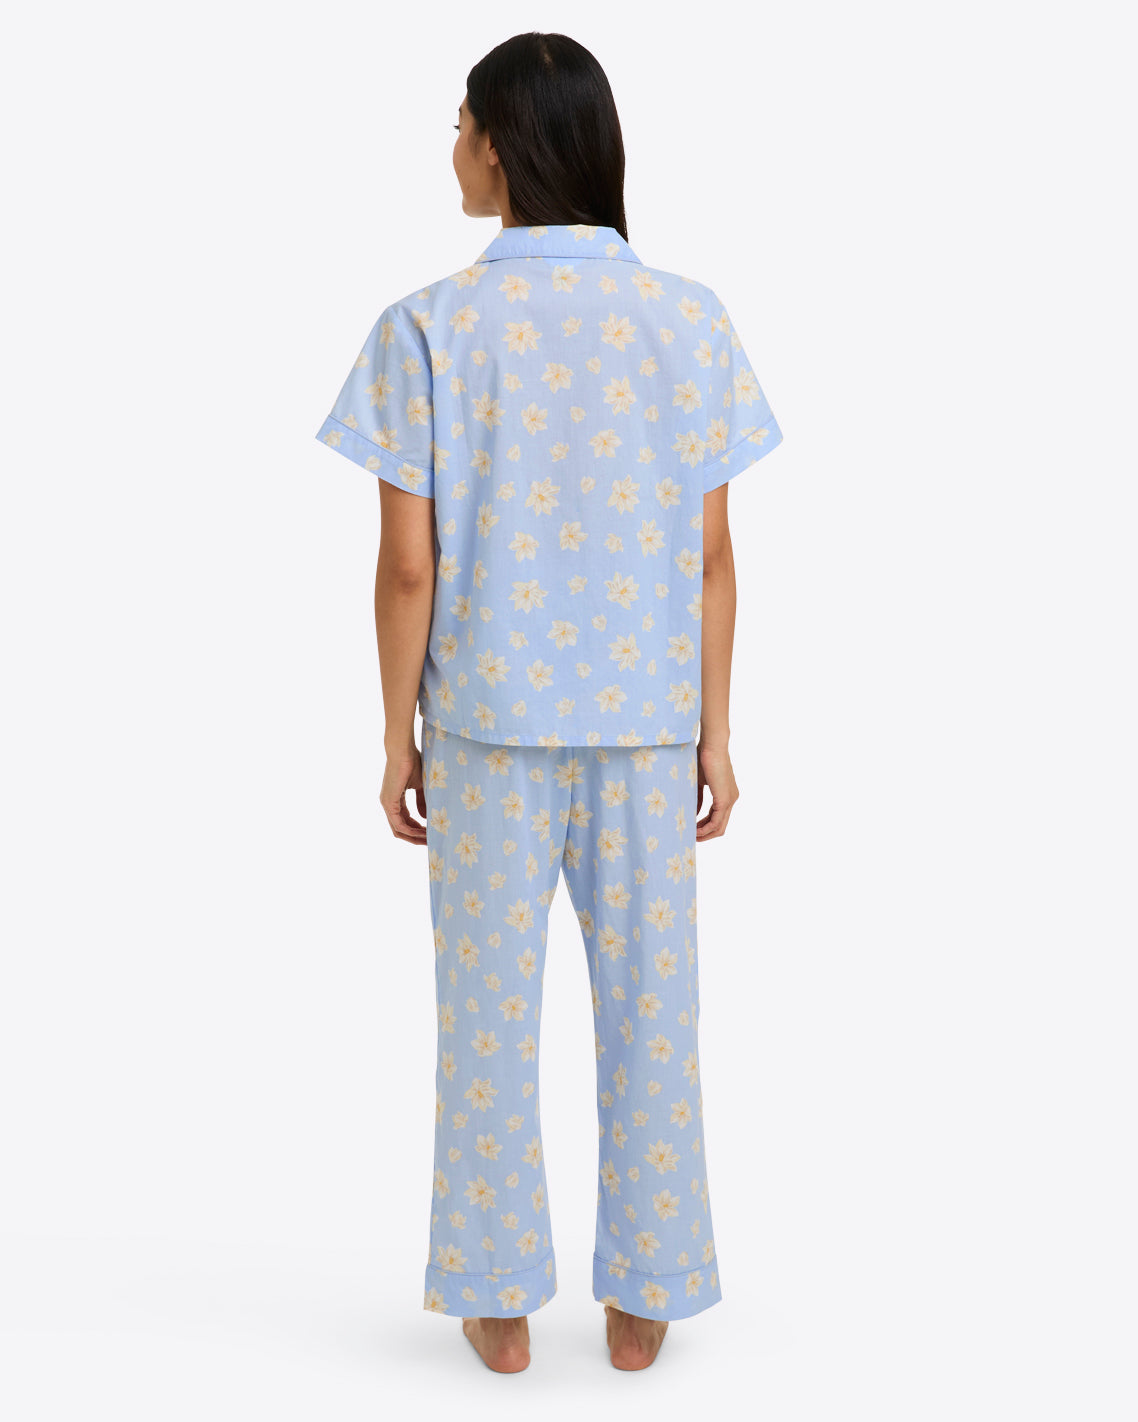 Linda Pajama Set in Magnolia